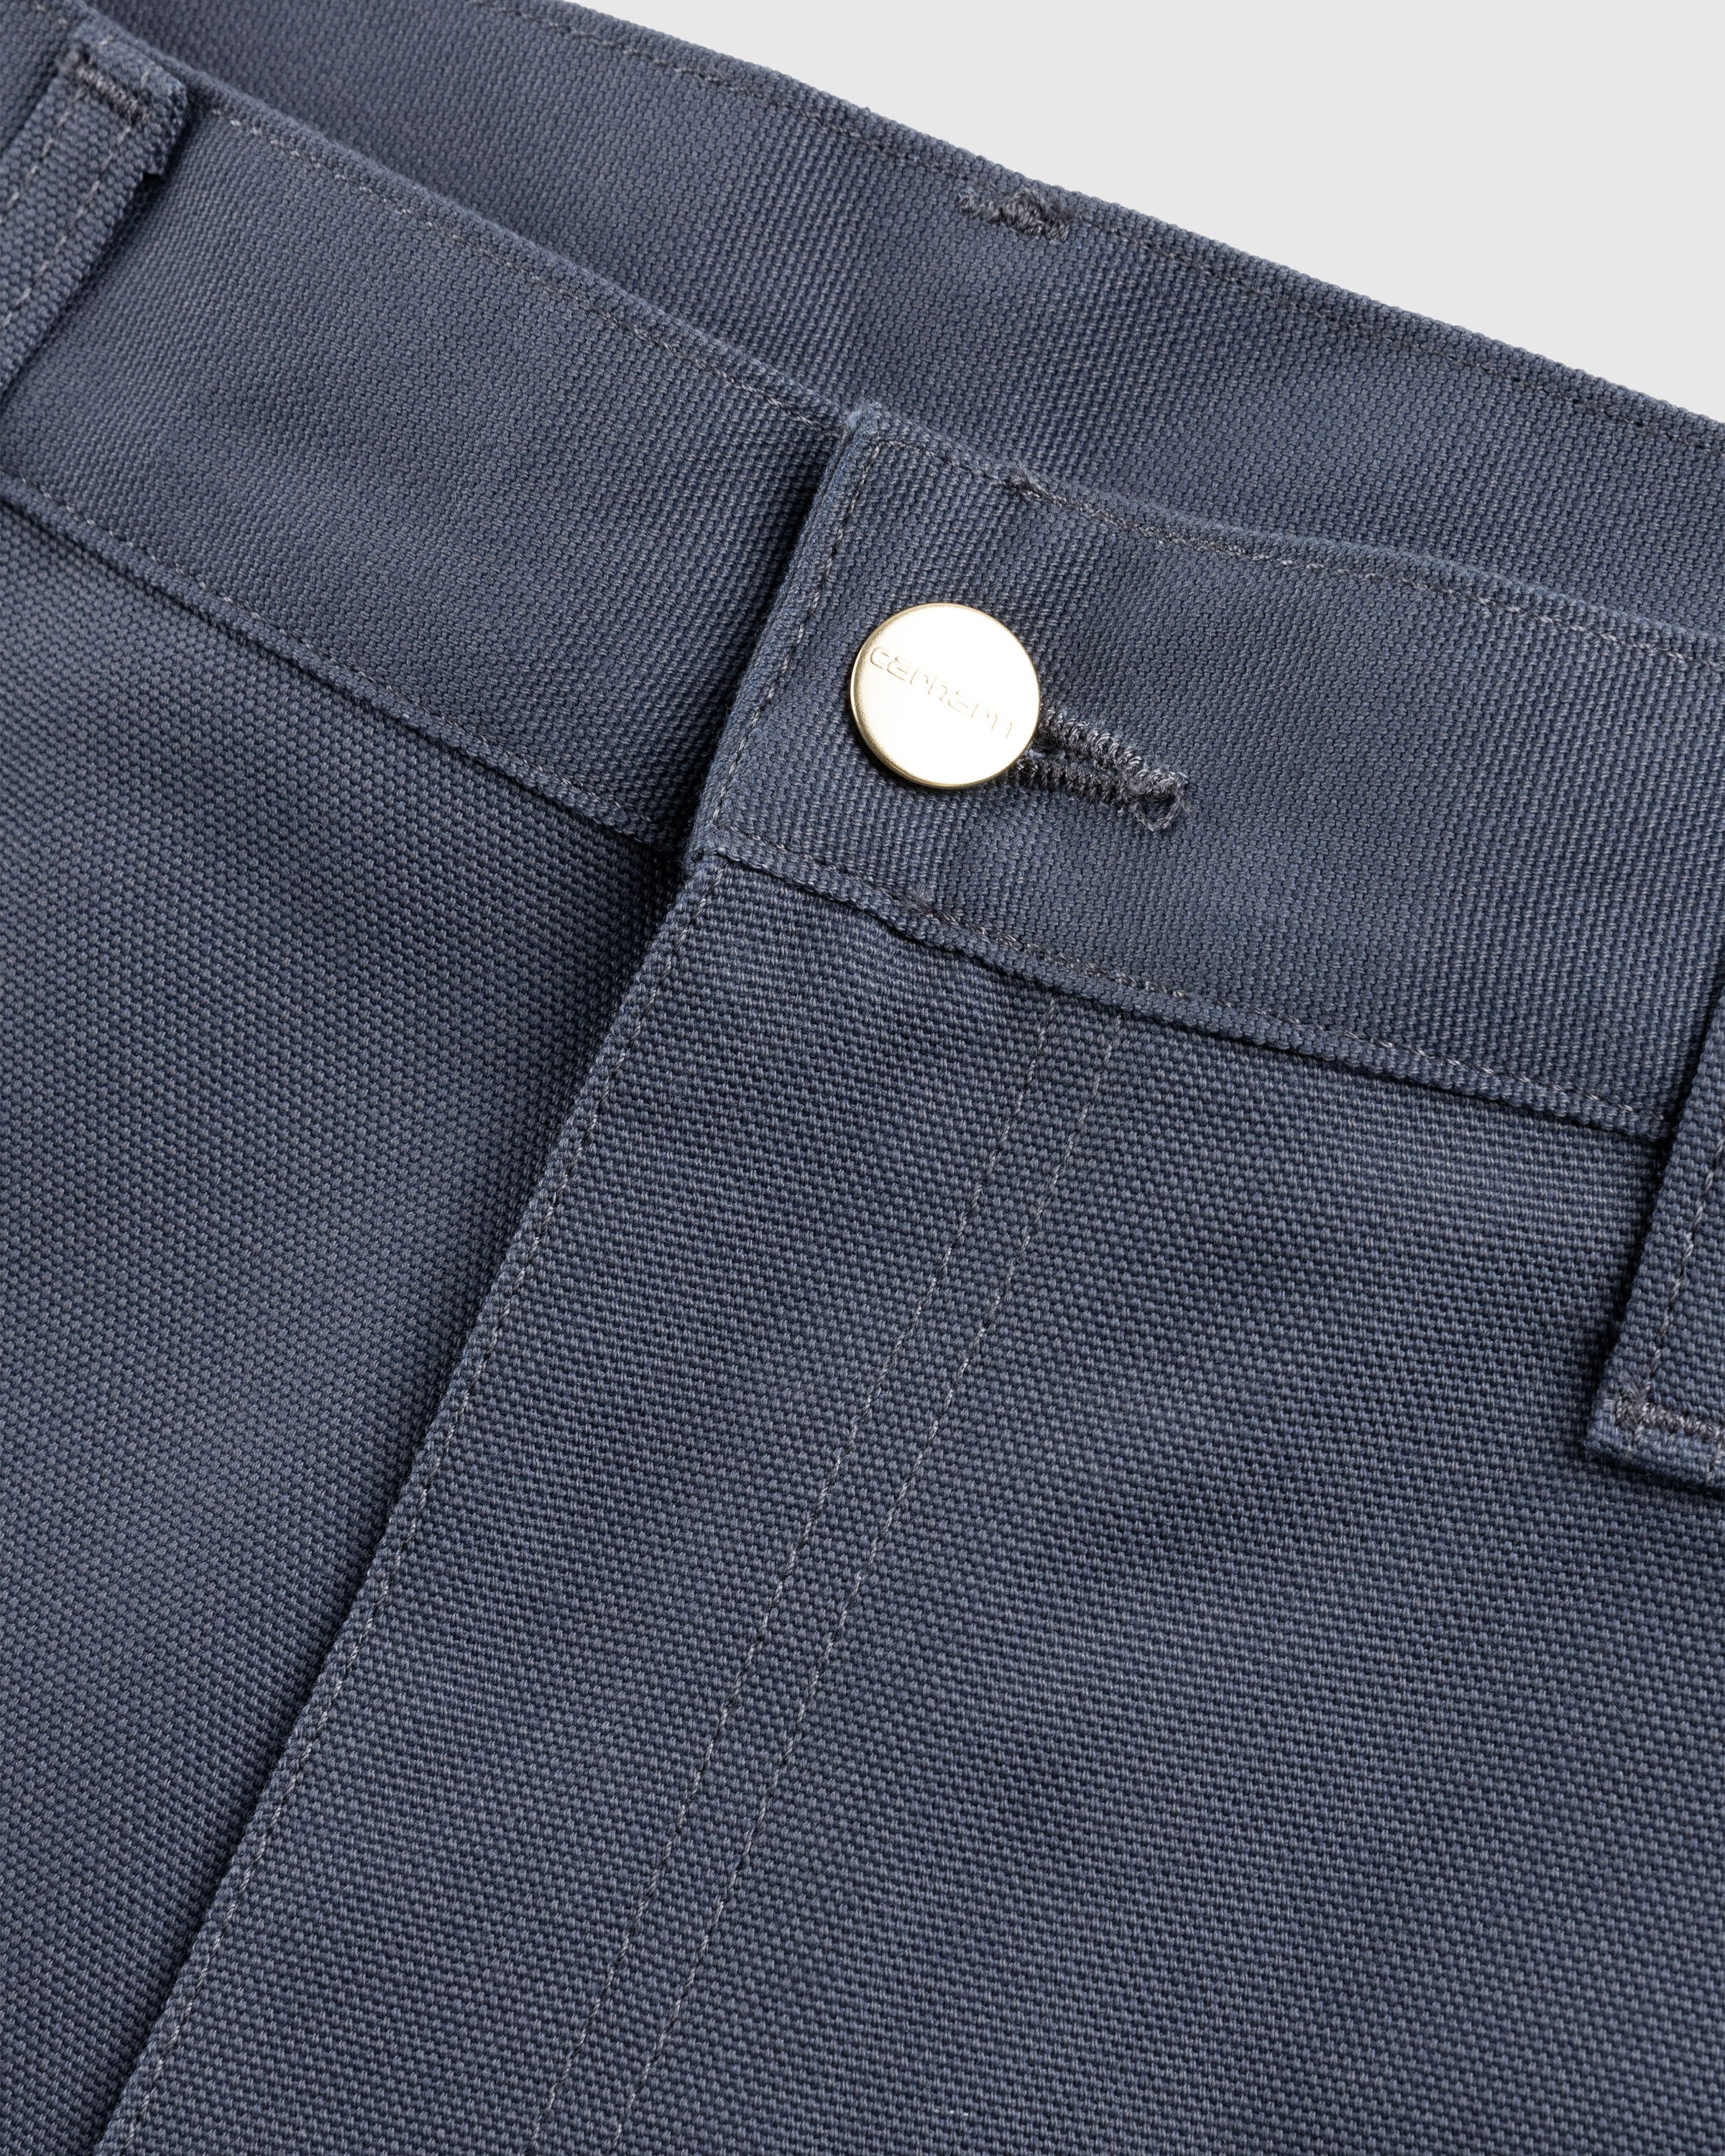 Carhartt WIP - Double Knee Pant Zeus/Rigid - Clothing - Grey - Image 5